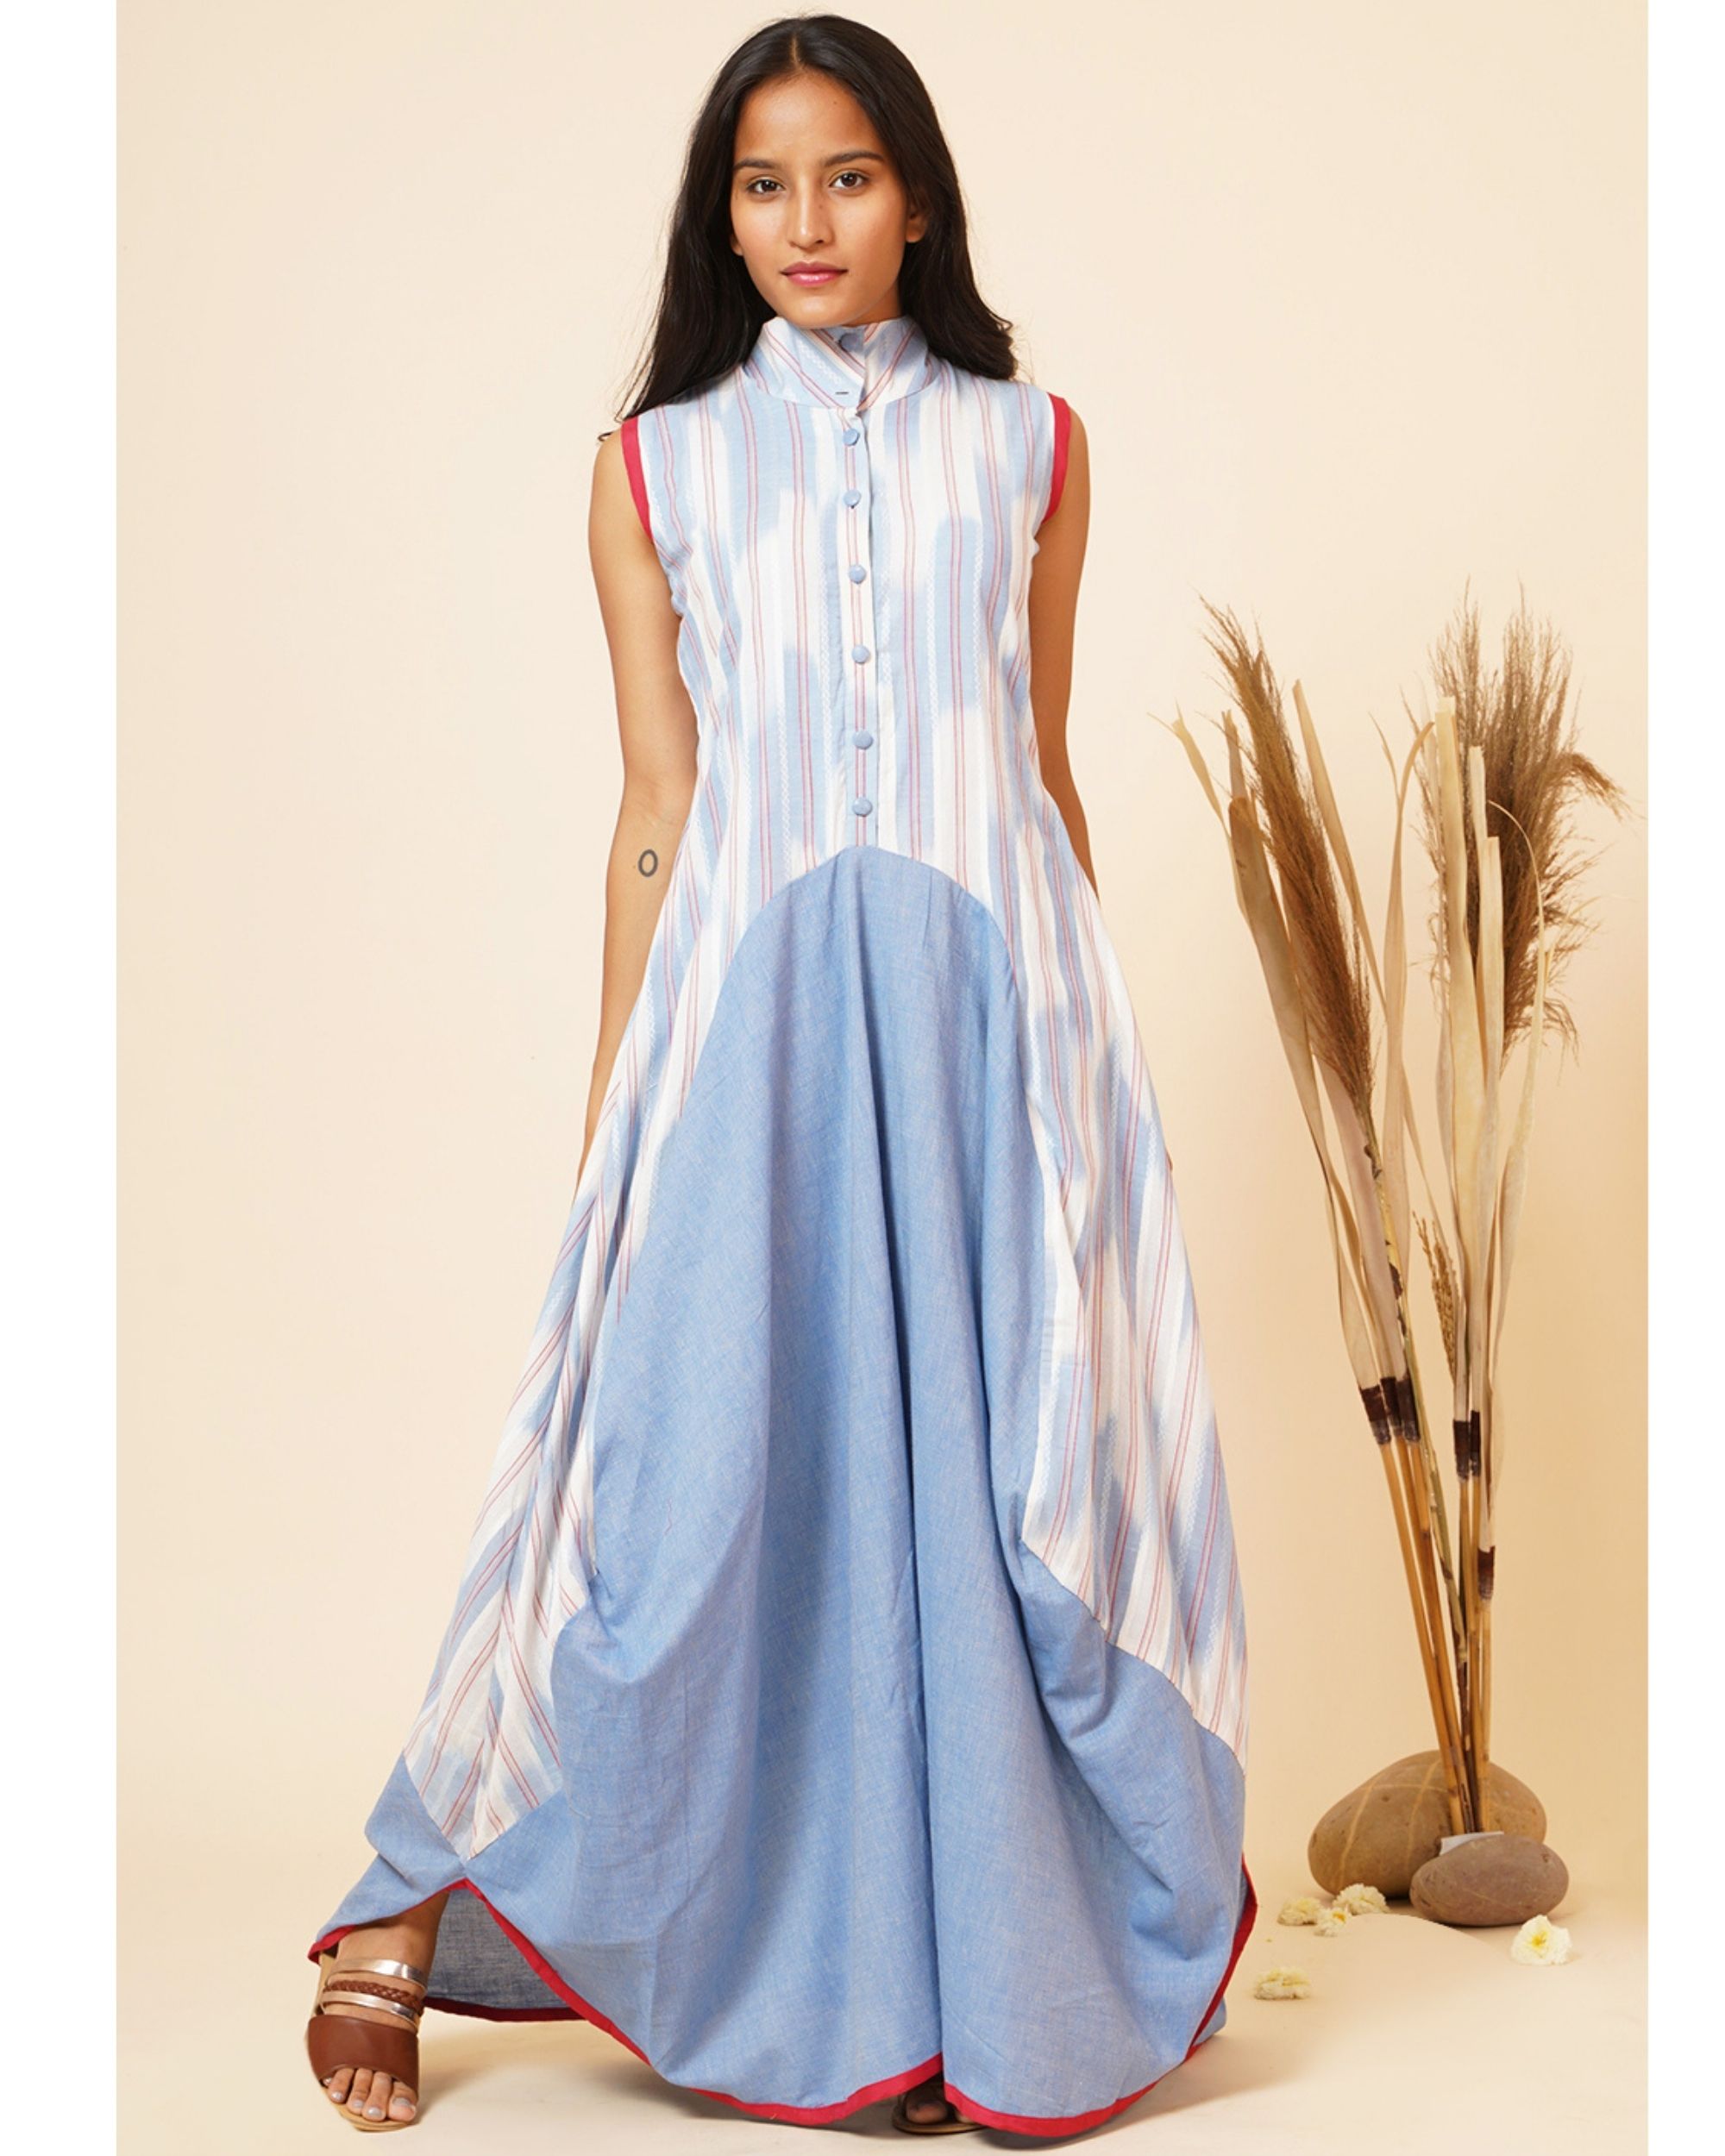 White and blue cowl dress by Miar | The Secret Label